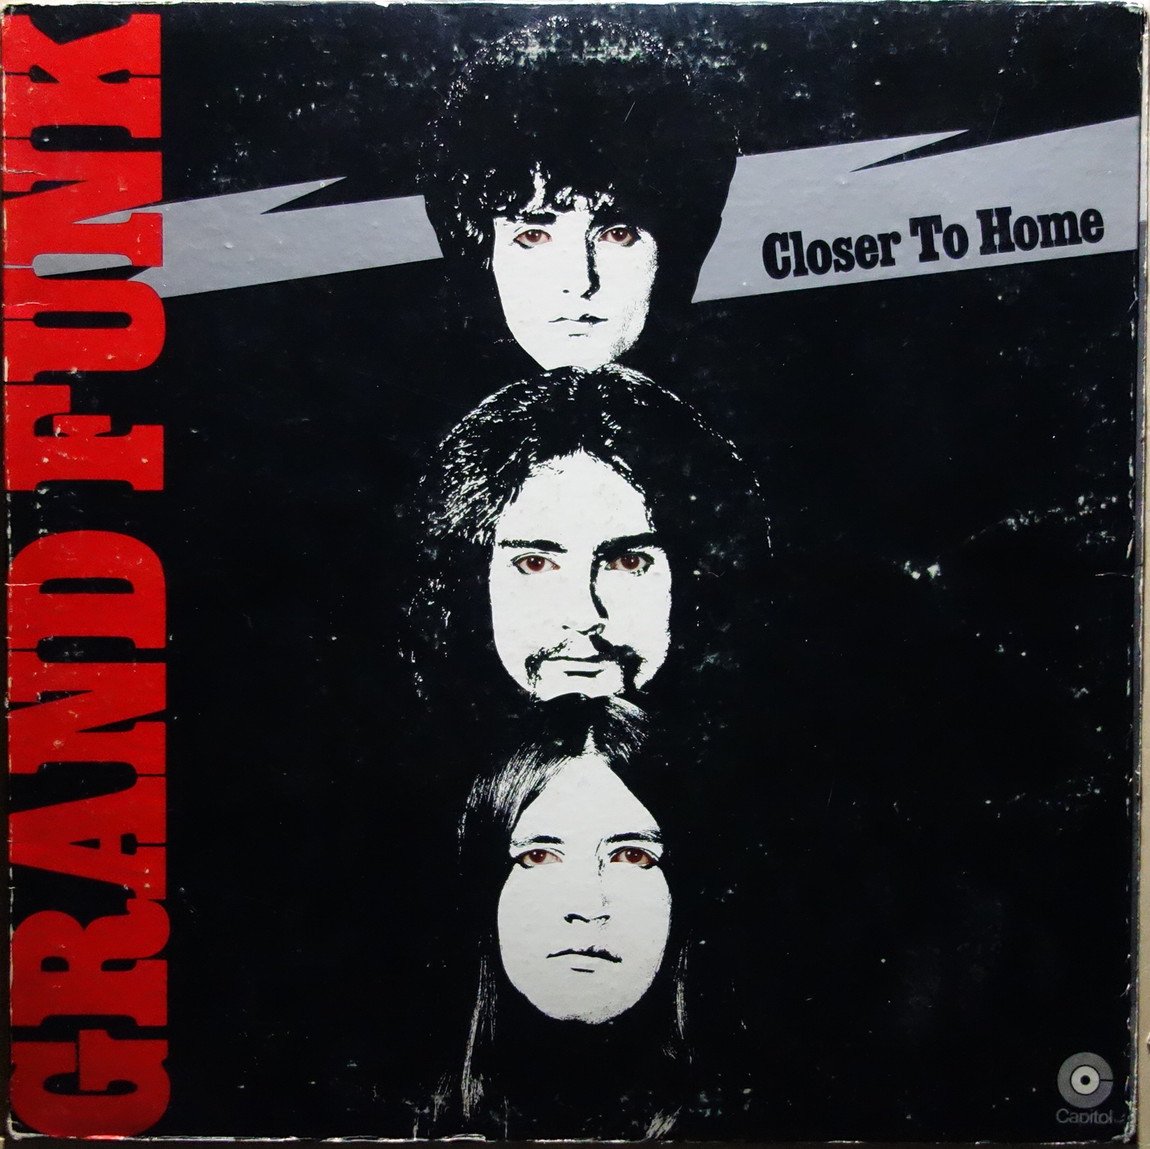 Grand Funk Railroad - Closer To Home - Vinylian - Vintage Vinyl ...